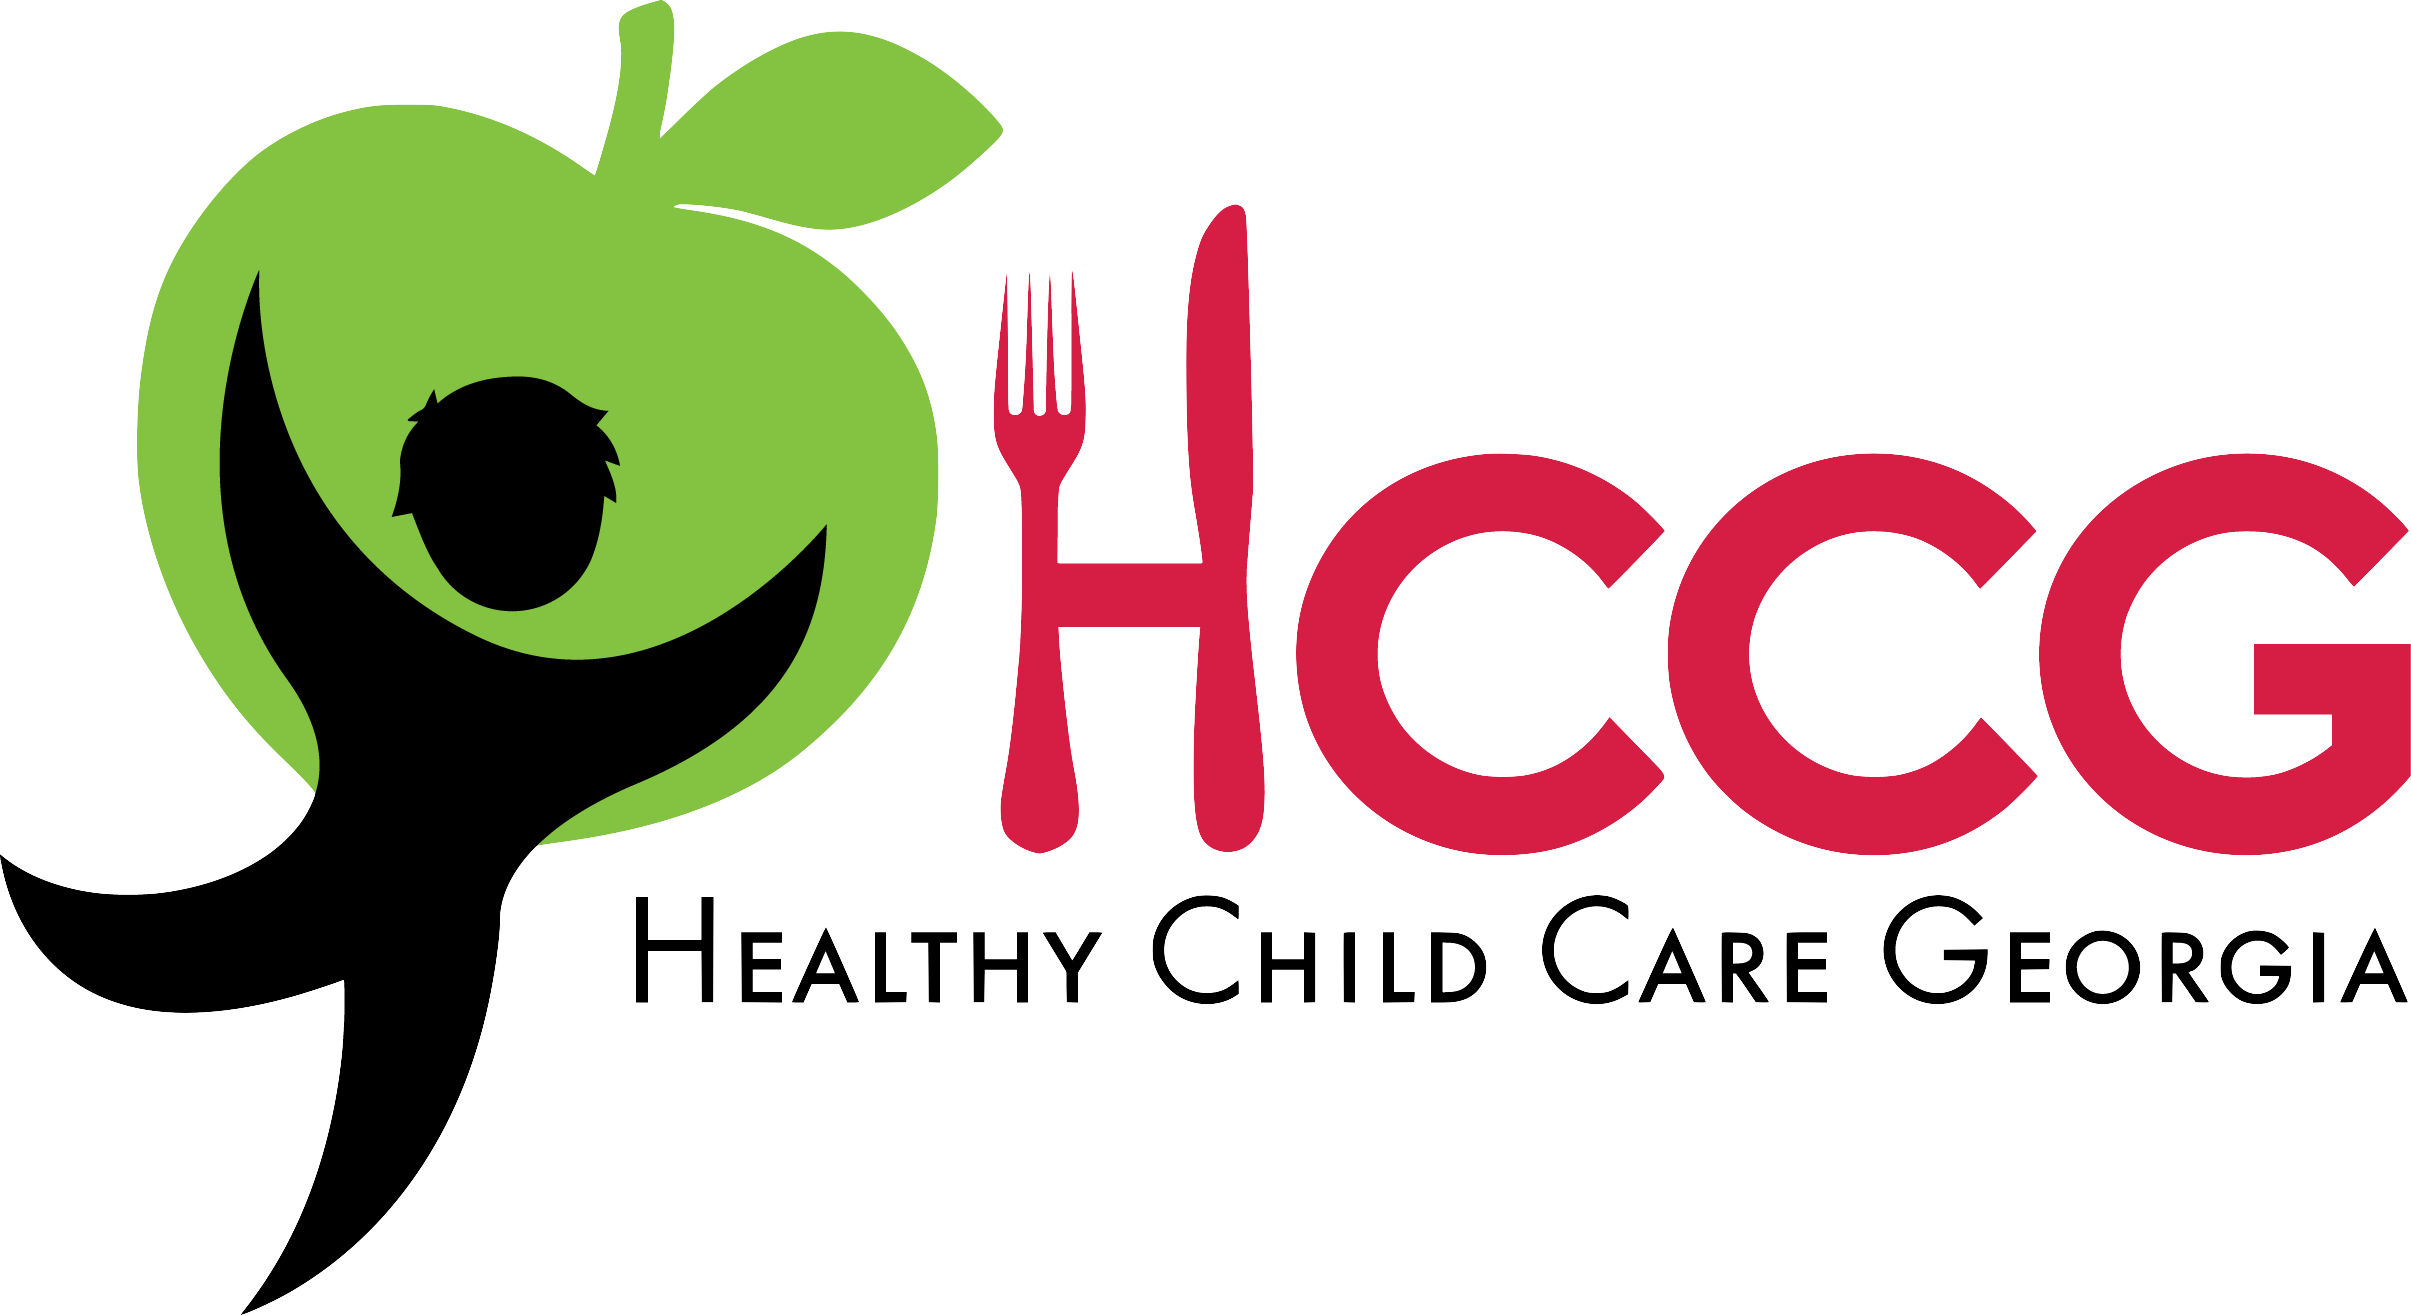 Health Childcare Georgia Logo